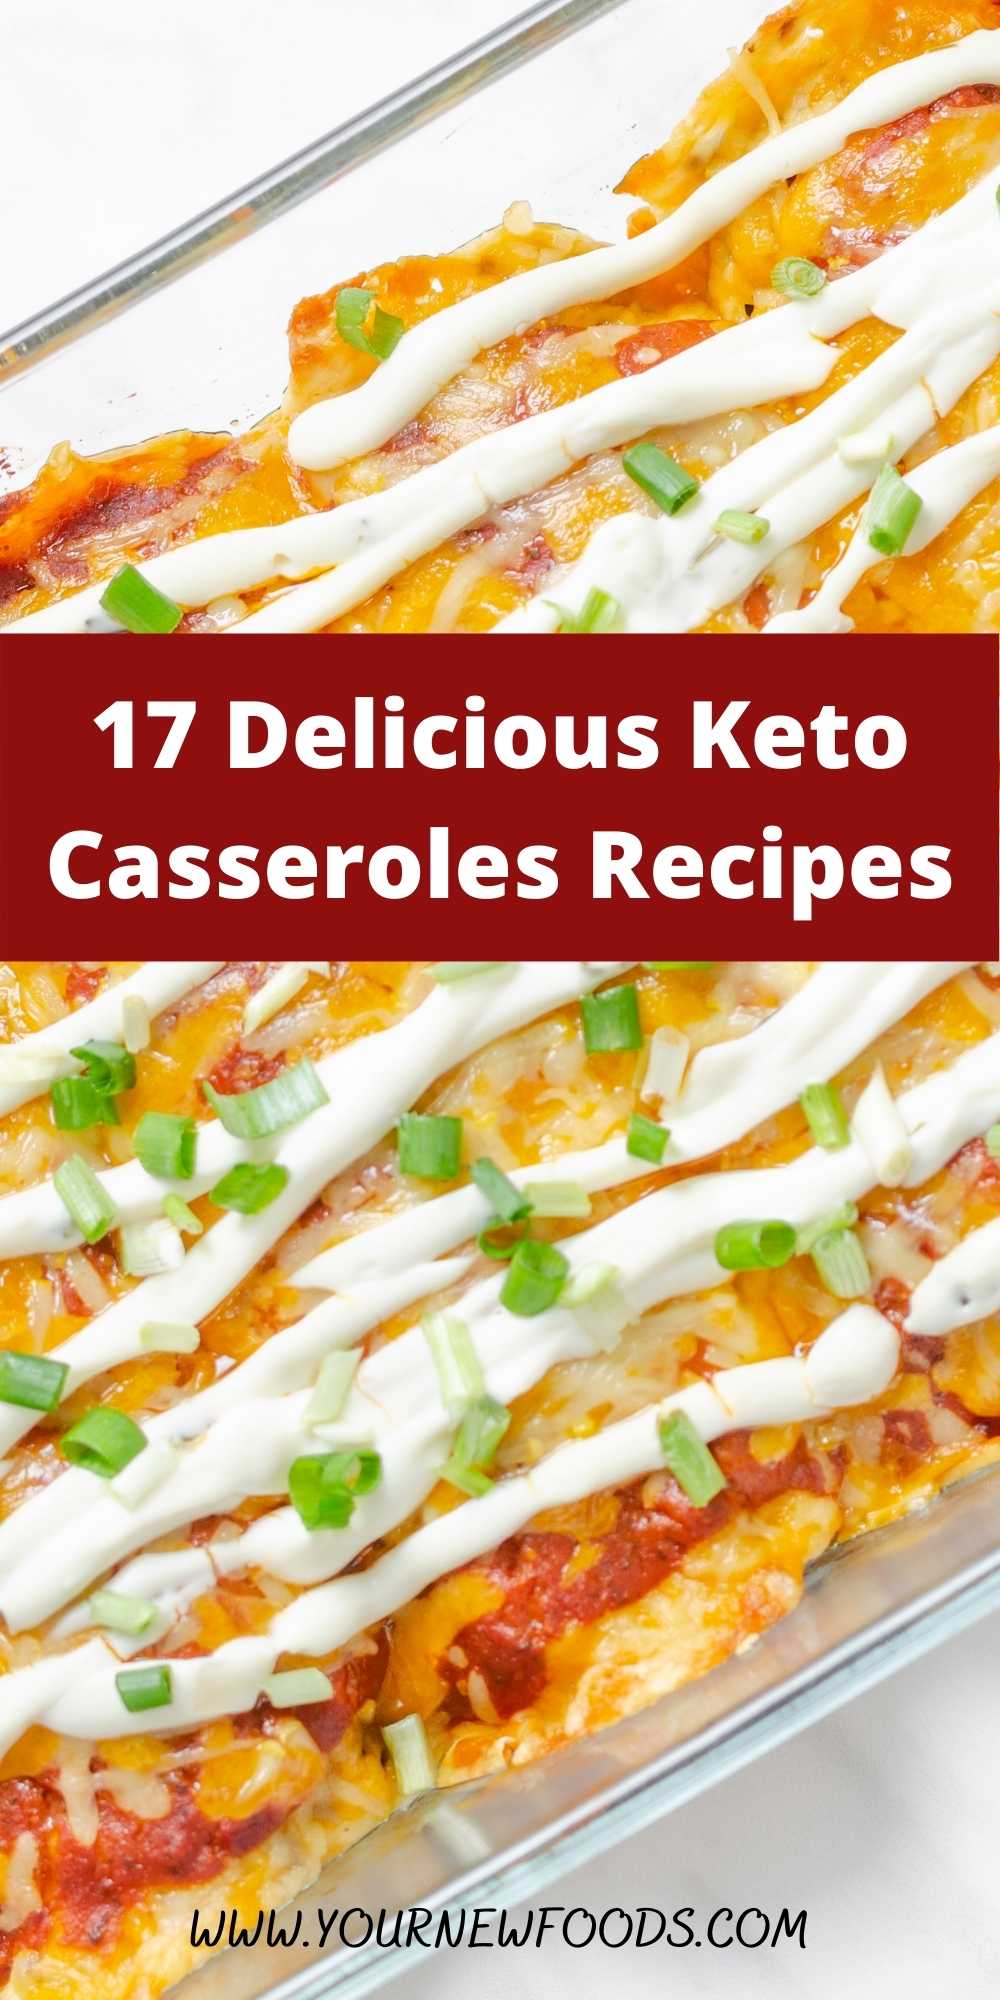 Keto Casseroles 17 recipes